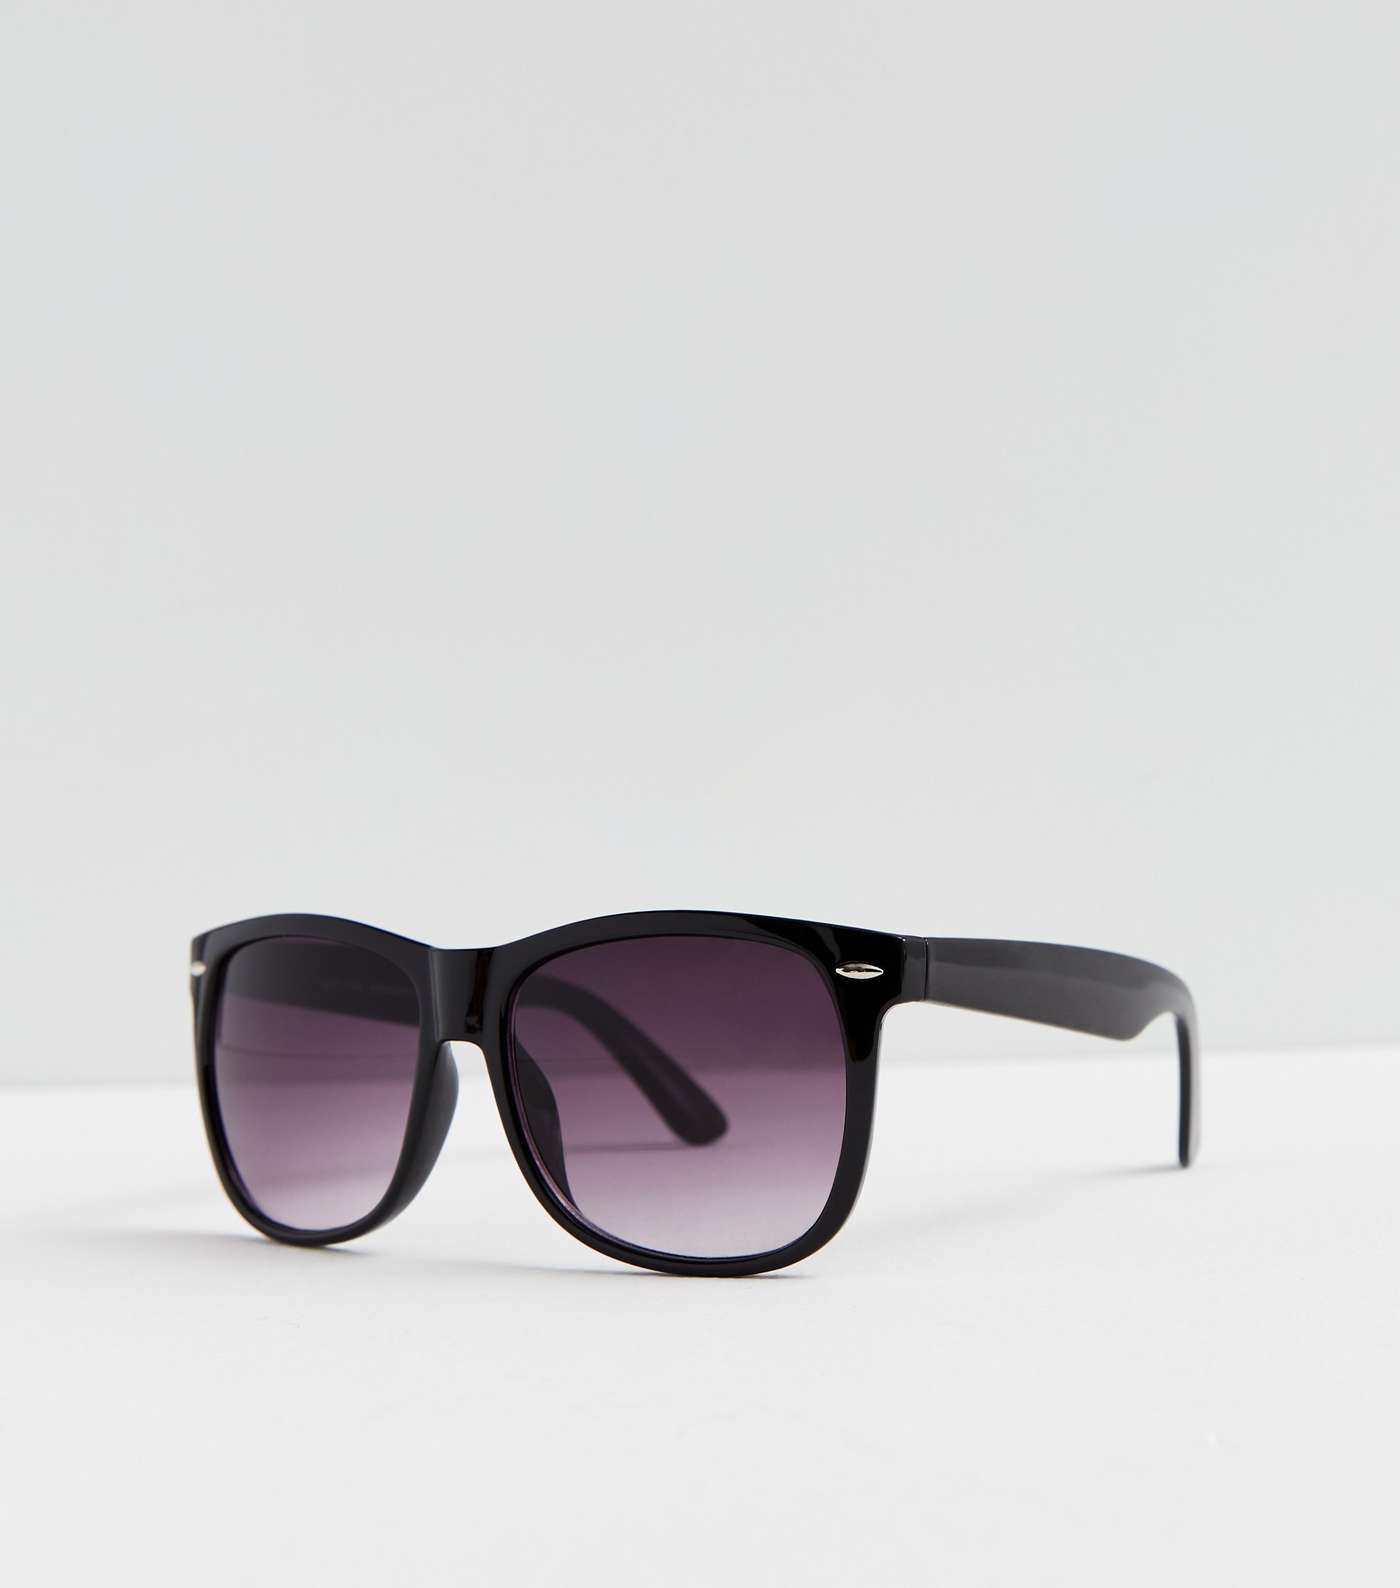 Black Square Retro Sunglasses Image 2